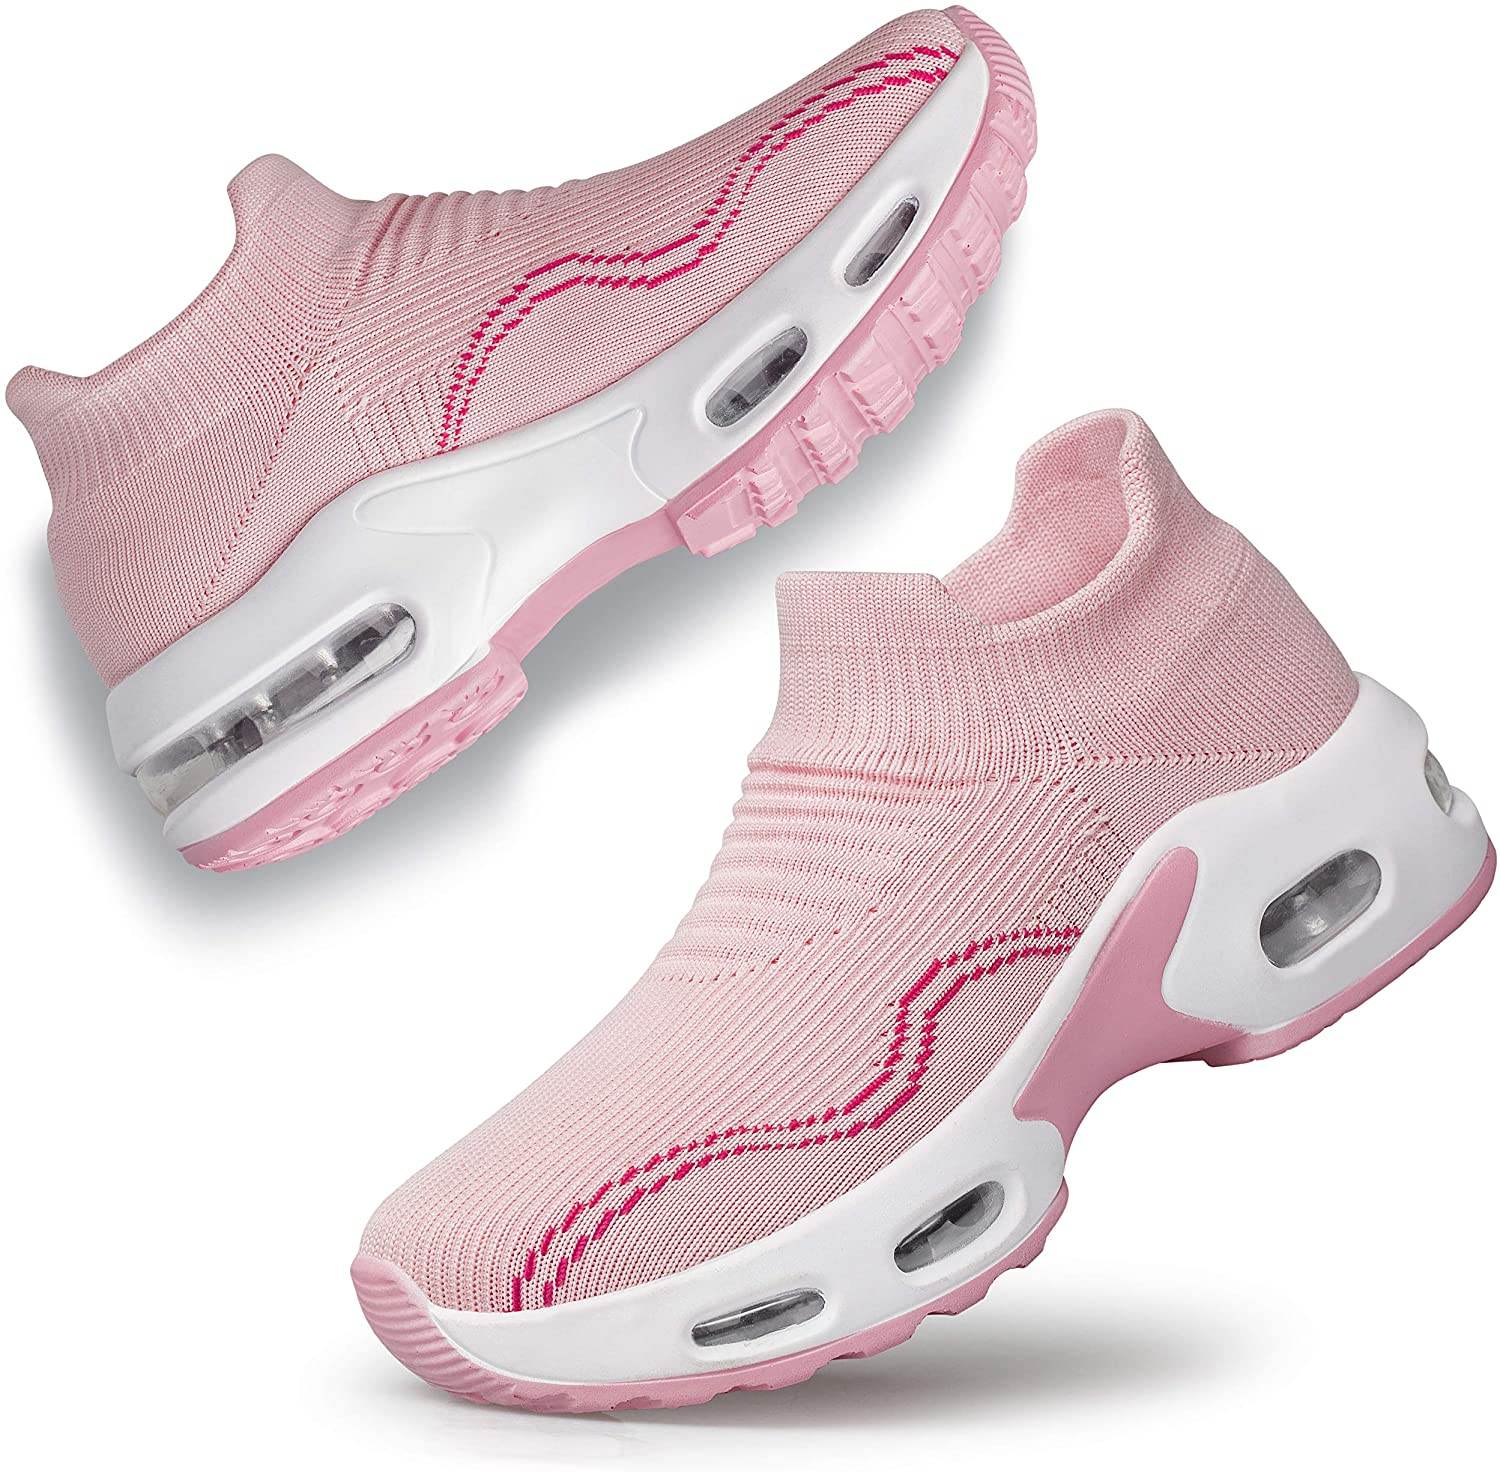 PDBQ Womens Walking Shoes Sock Sneakers Nurse Mesh Slip On Air Cushion Platform Loafers Breathable Lightweight Comfort Socks Shoes 